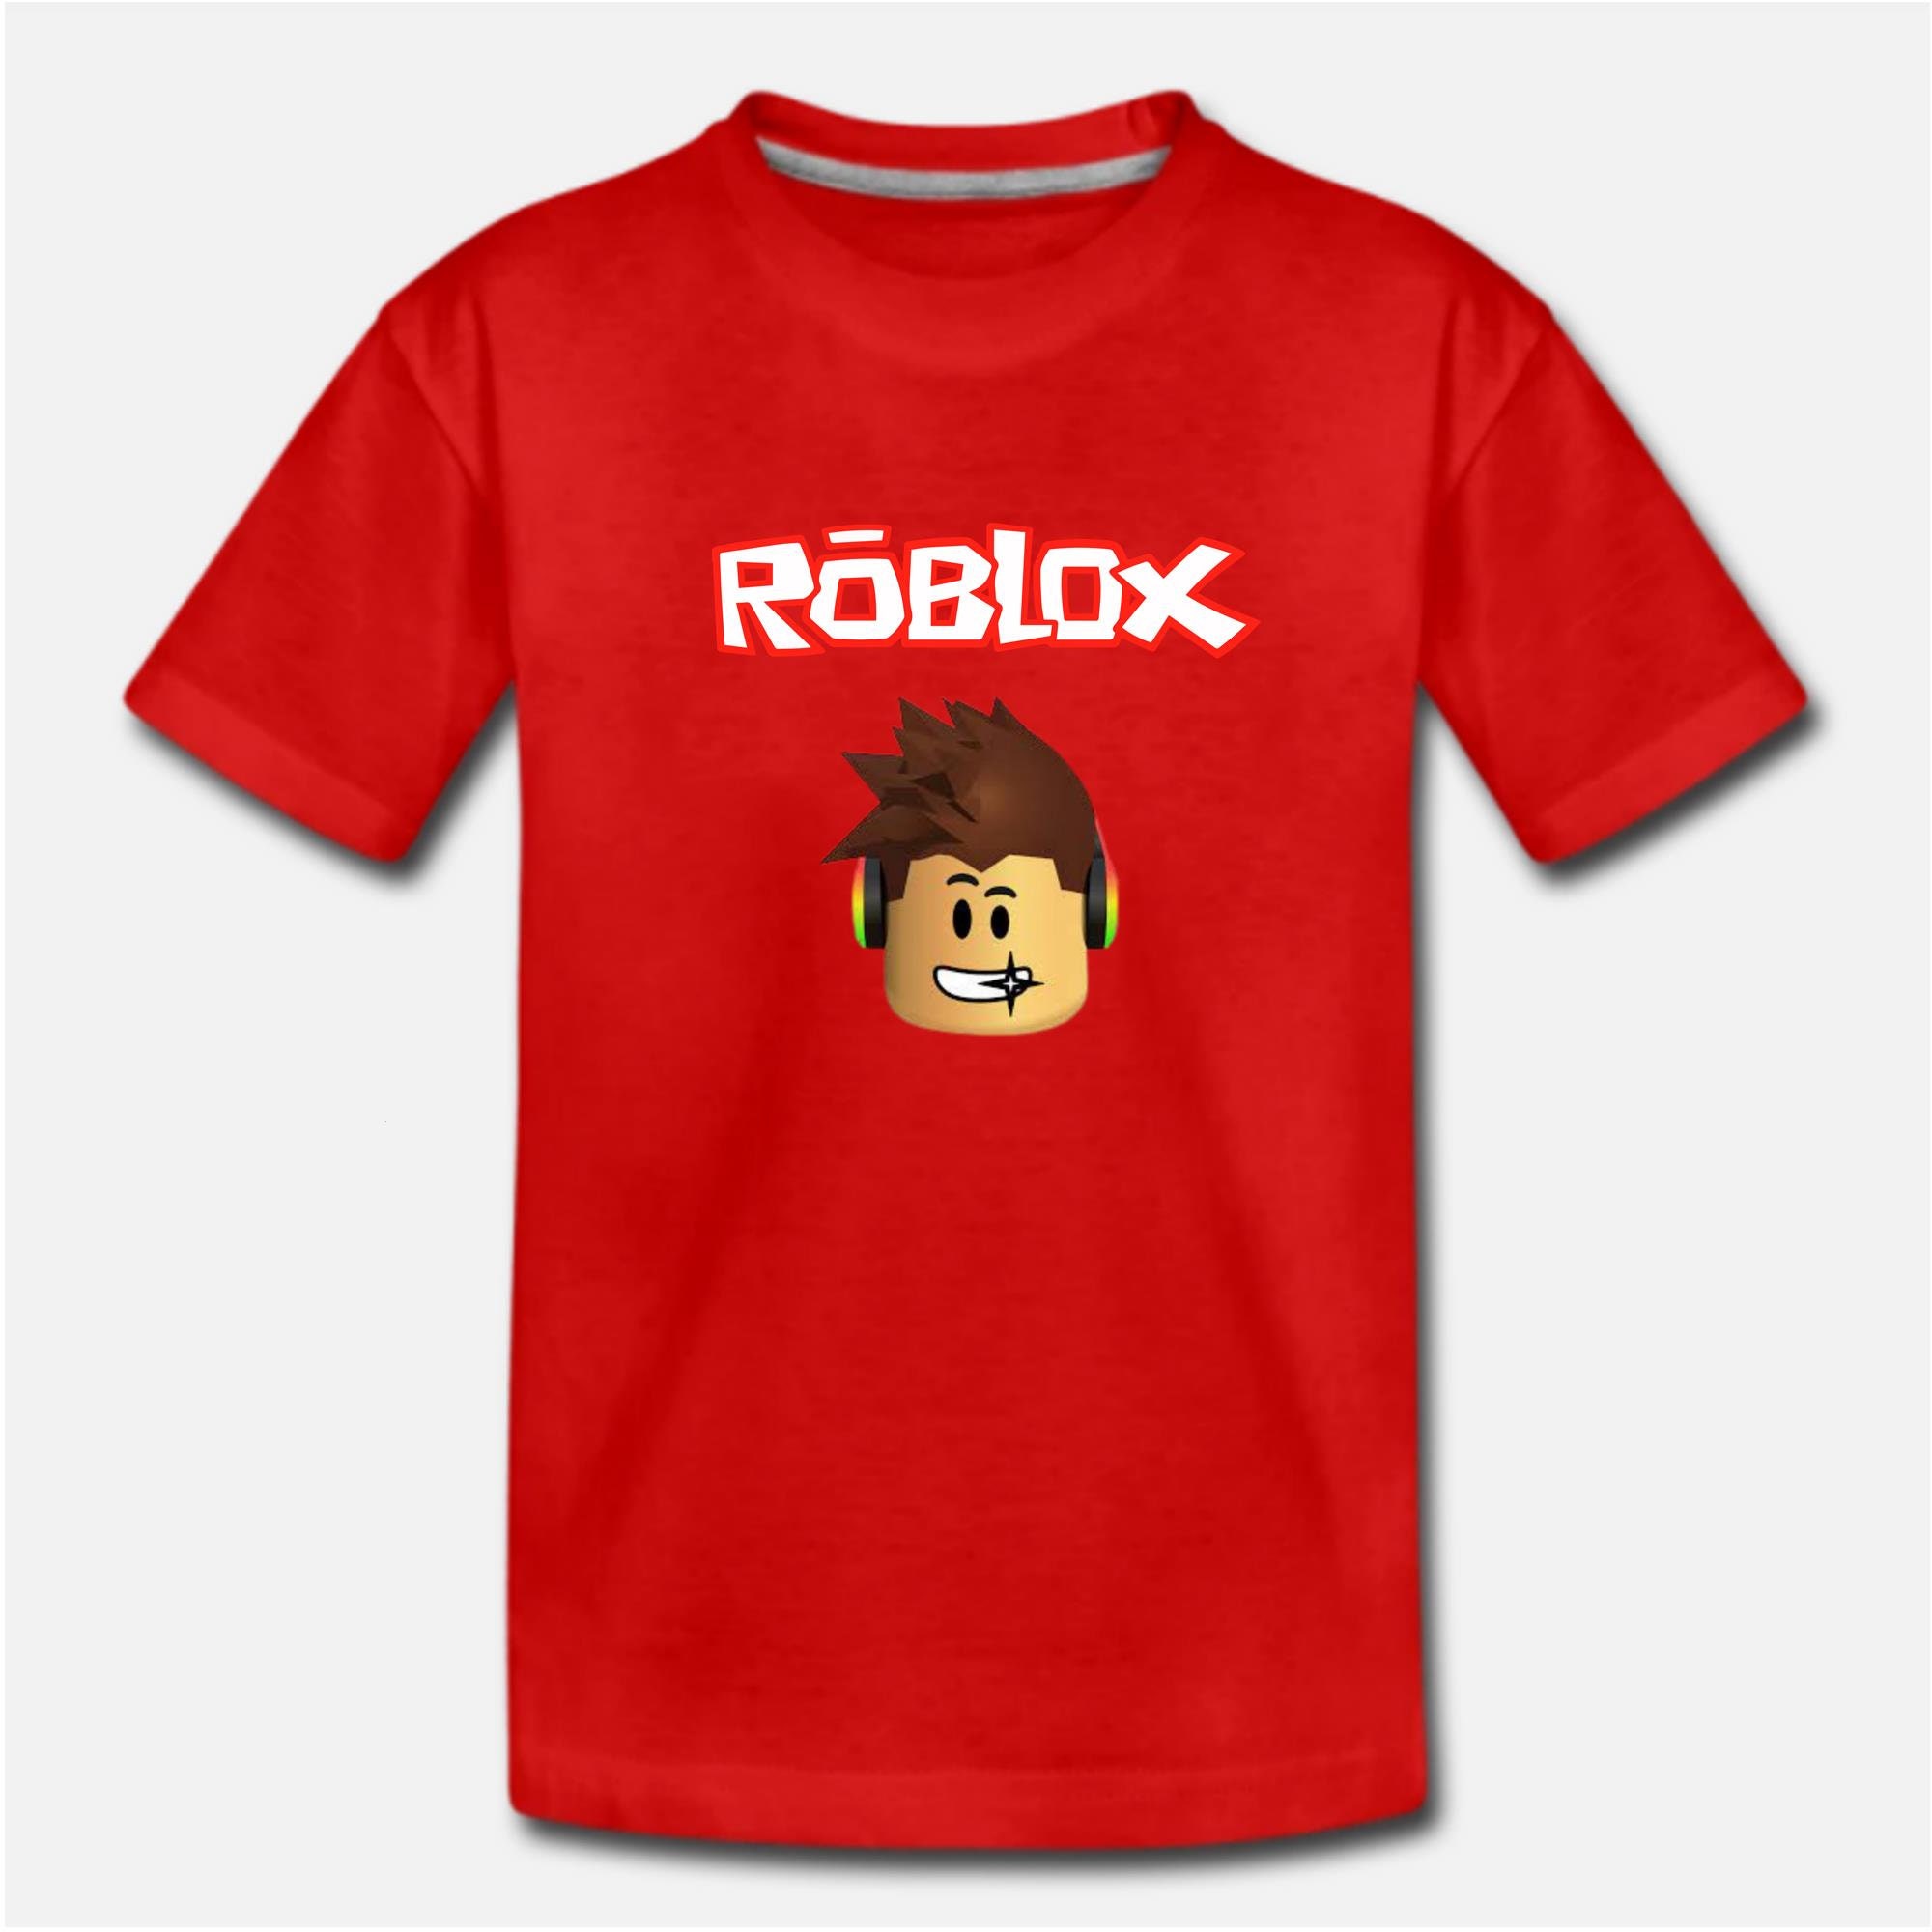 27 Roblox free T shirts ideas  free t shirt design, roblox t shirts, roblox  shirt